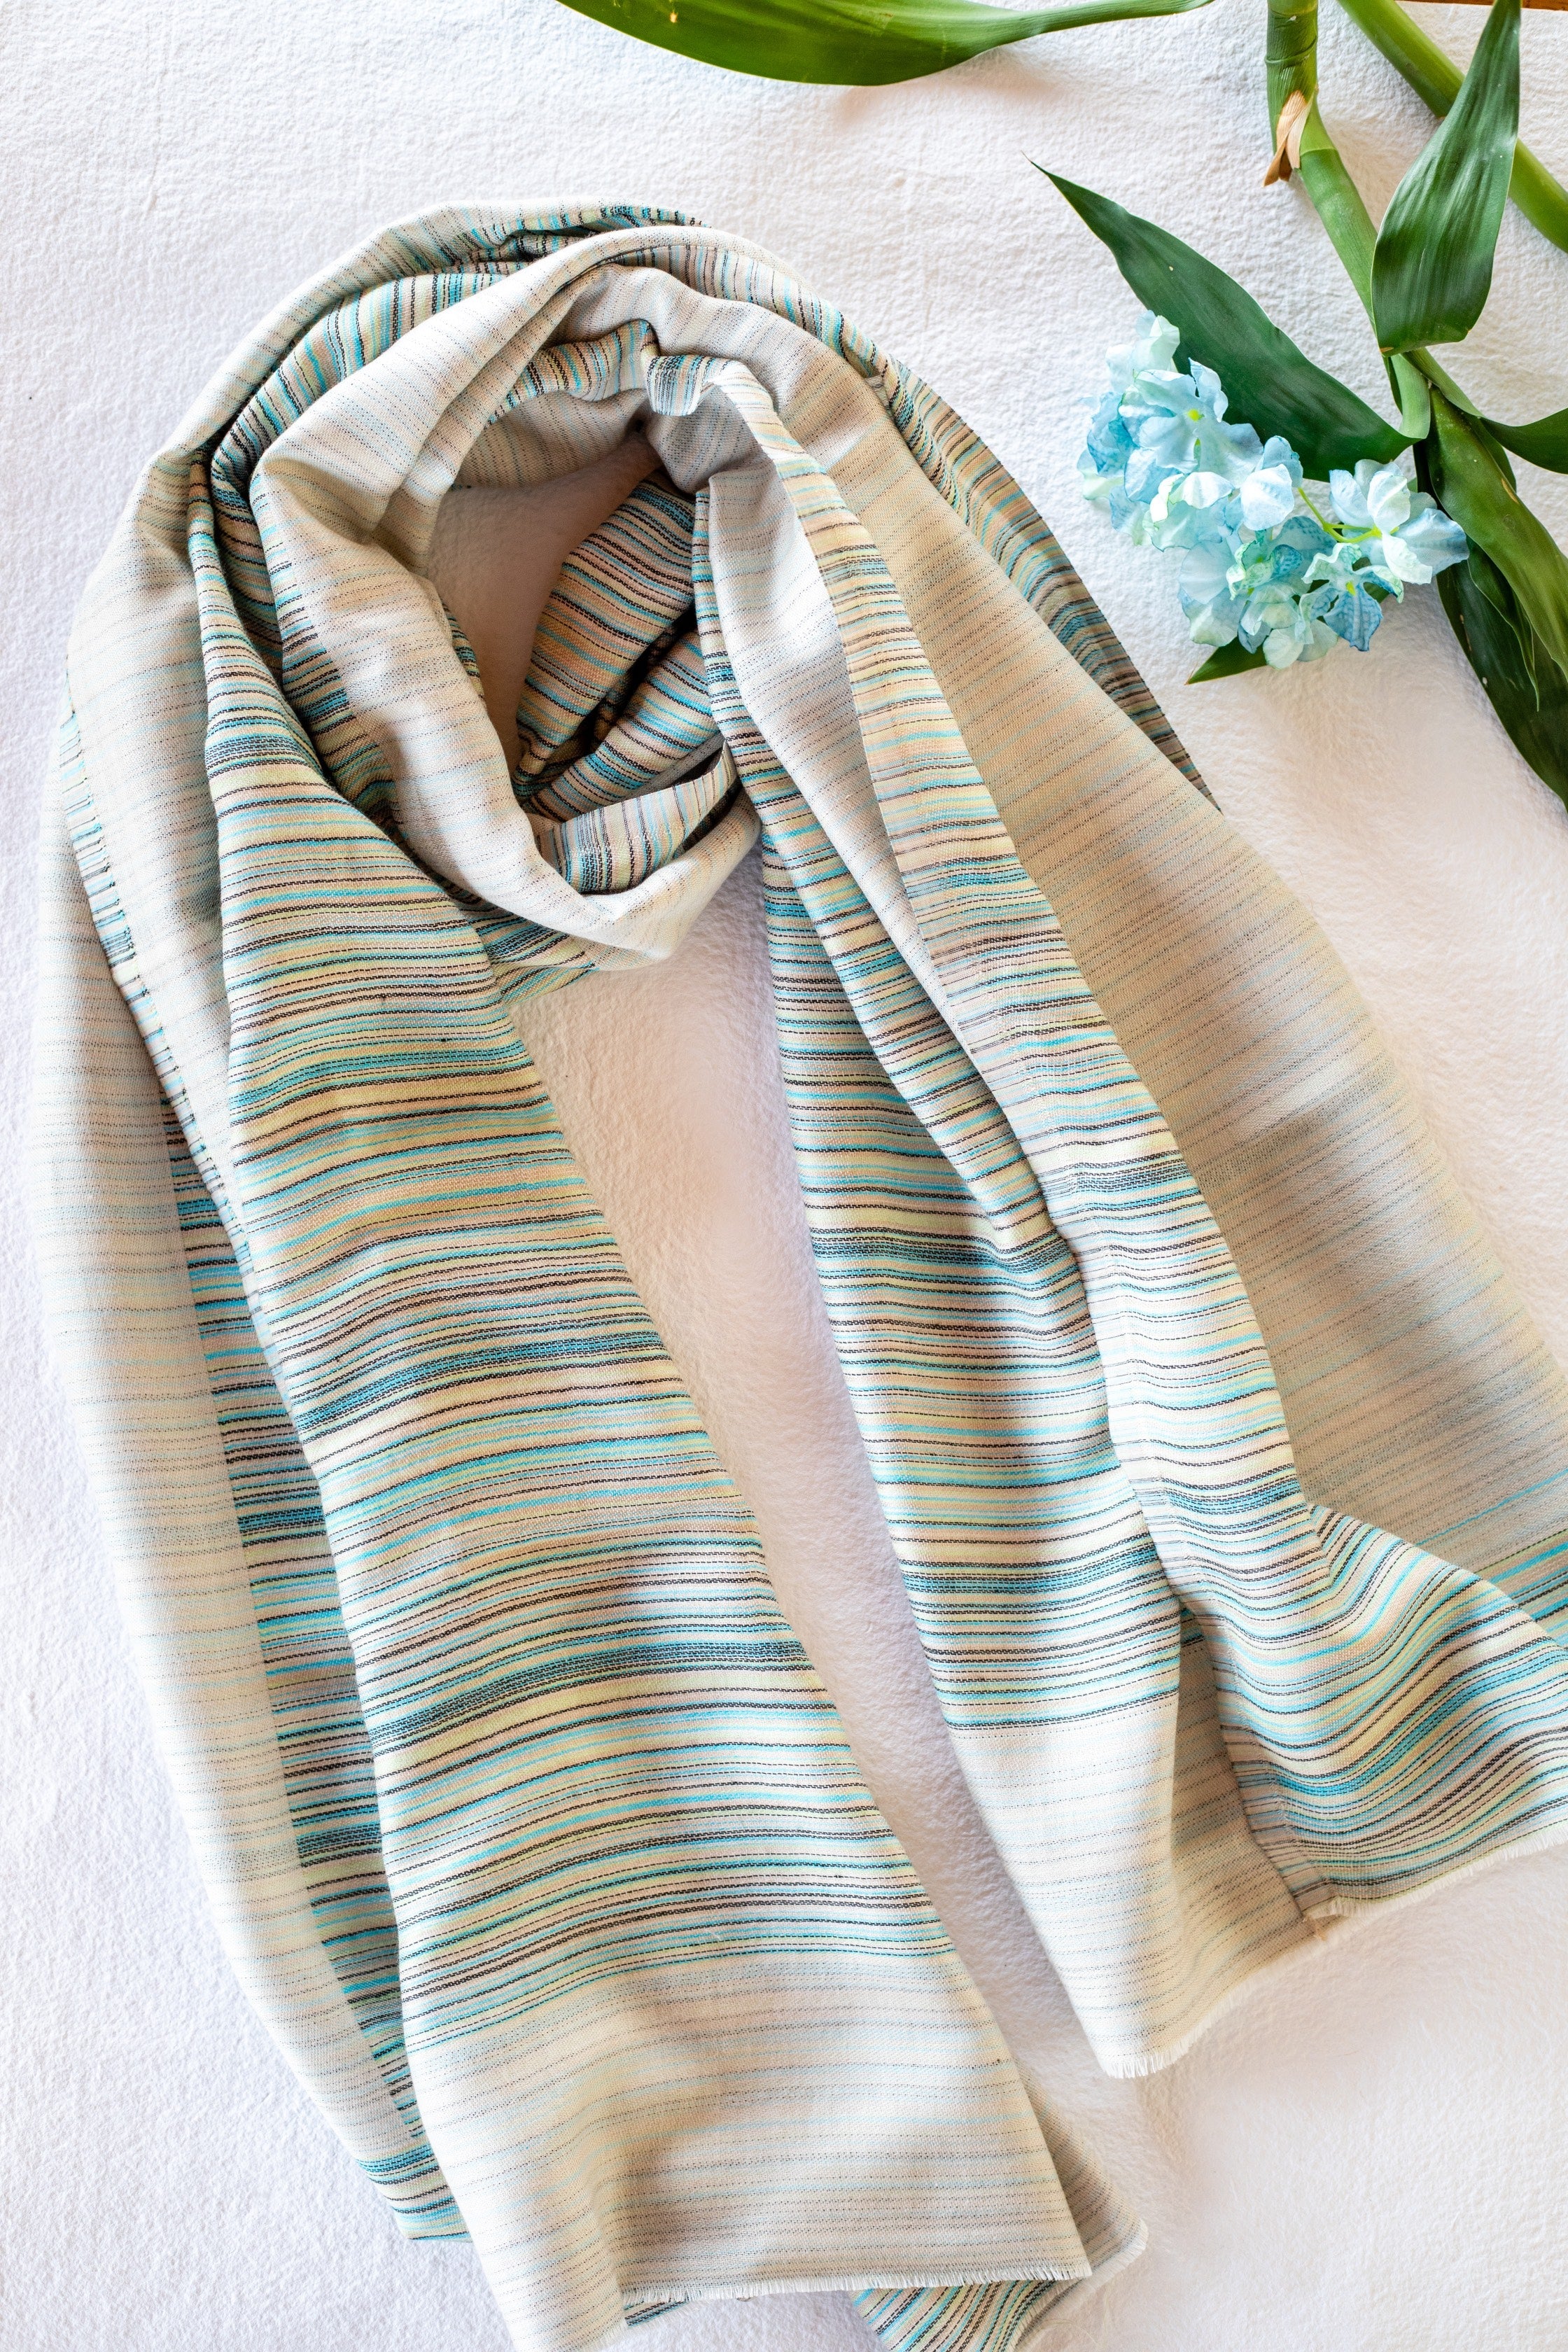 OMVAI Spring Summer Pastel Reversible Stripes Modal Silk Stole Beige